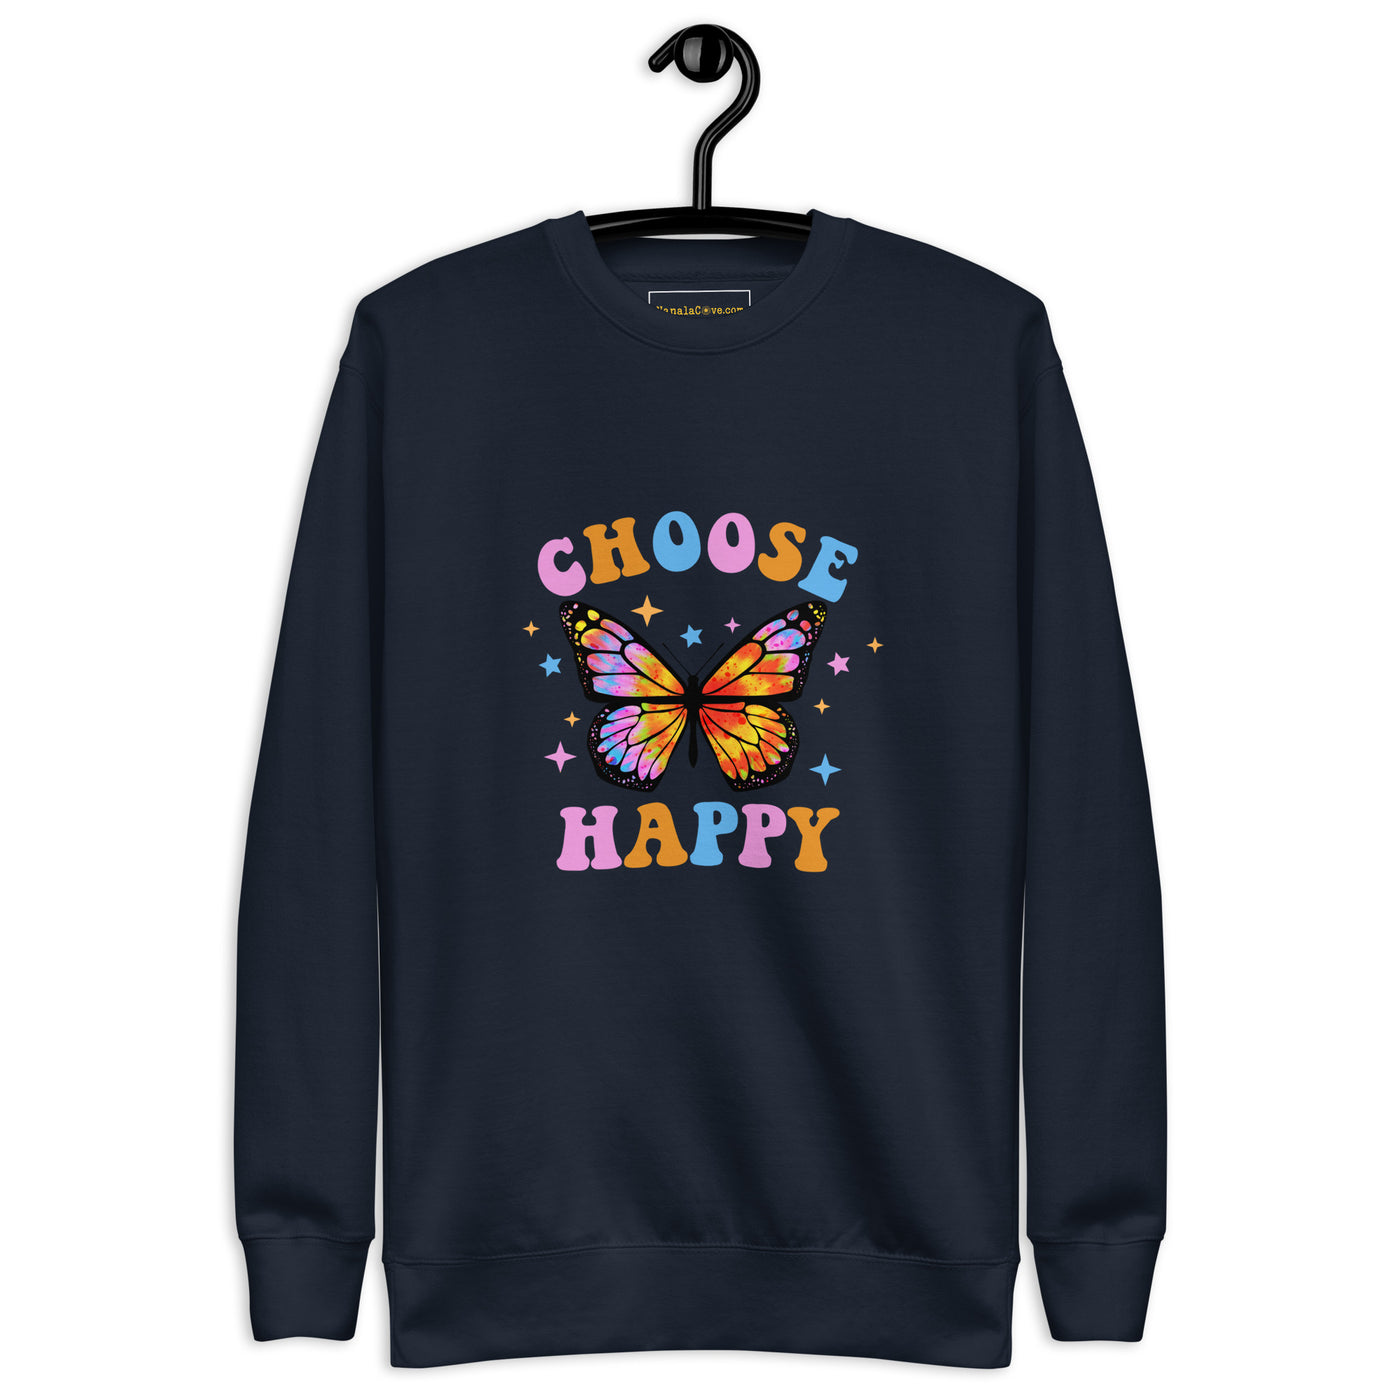 "Choose Happy Butterfly" Premium Sweatshirt